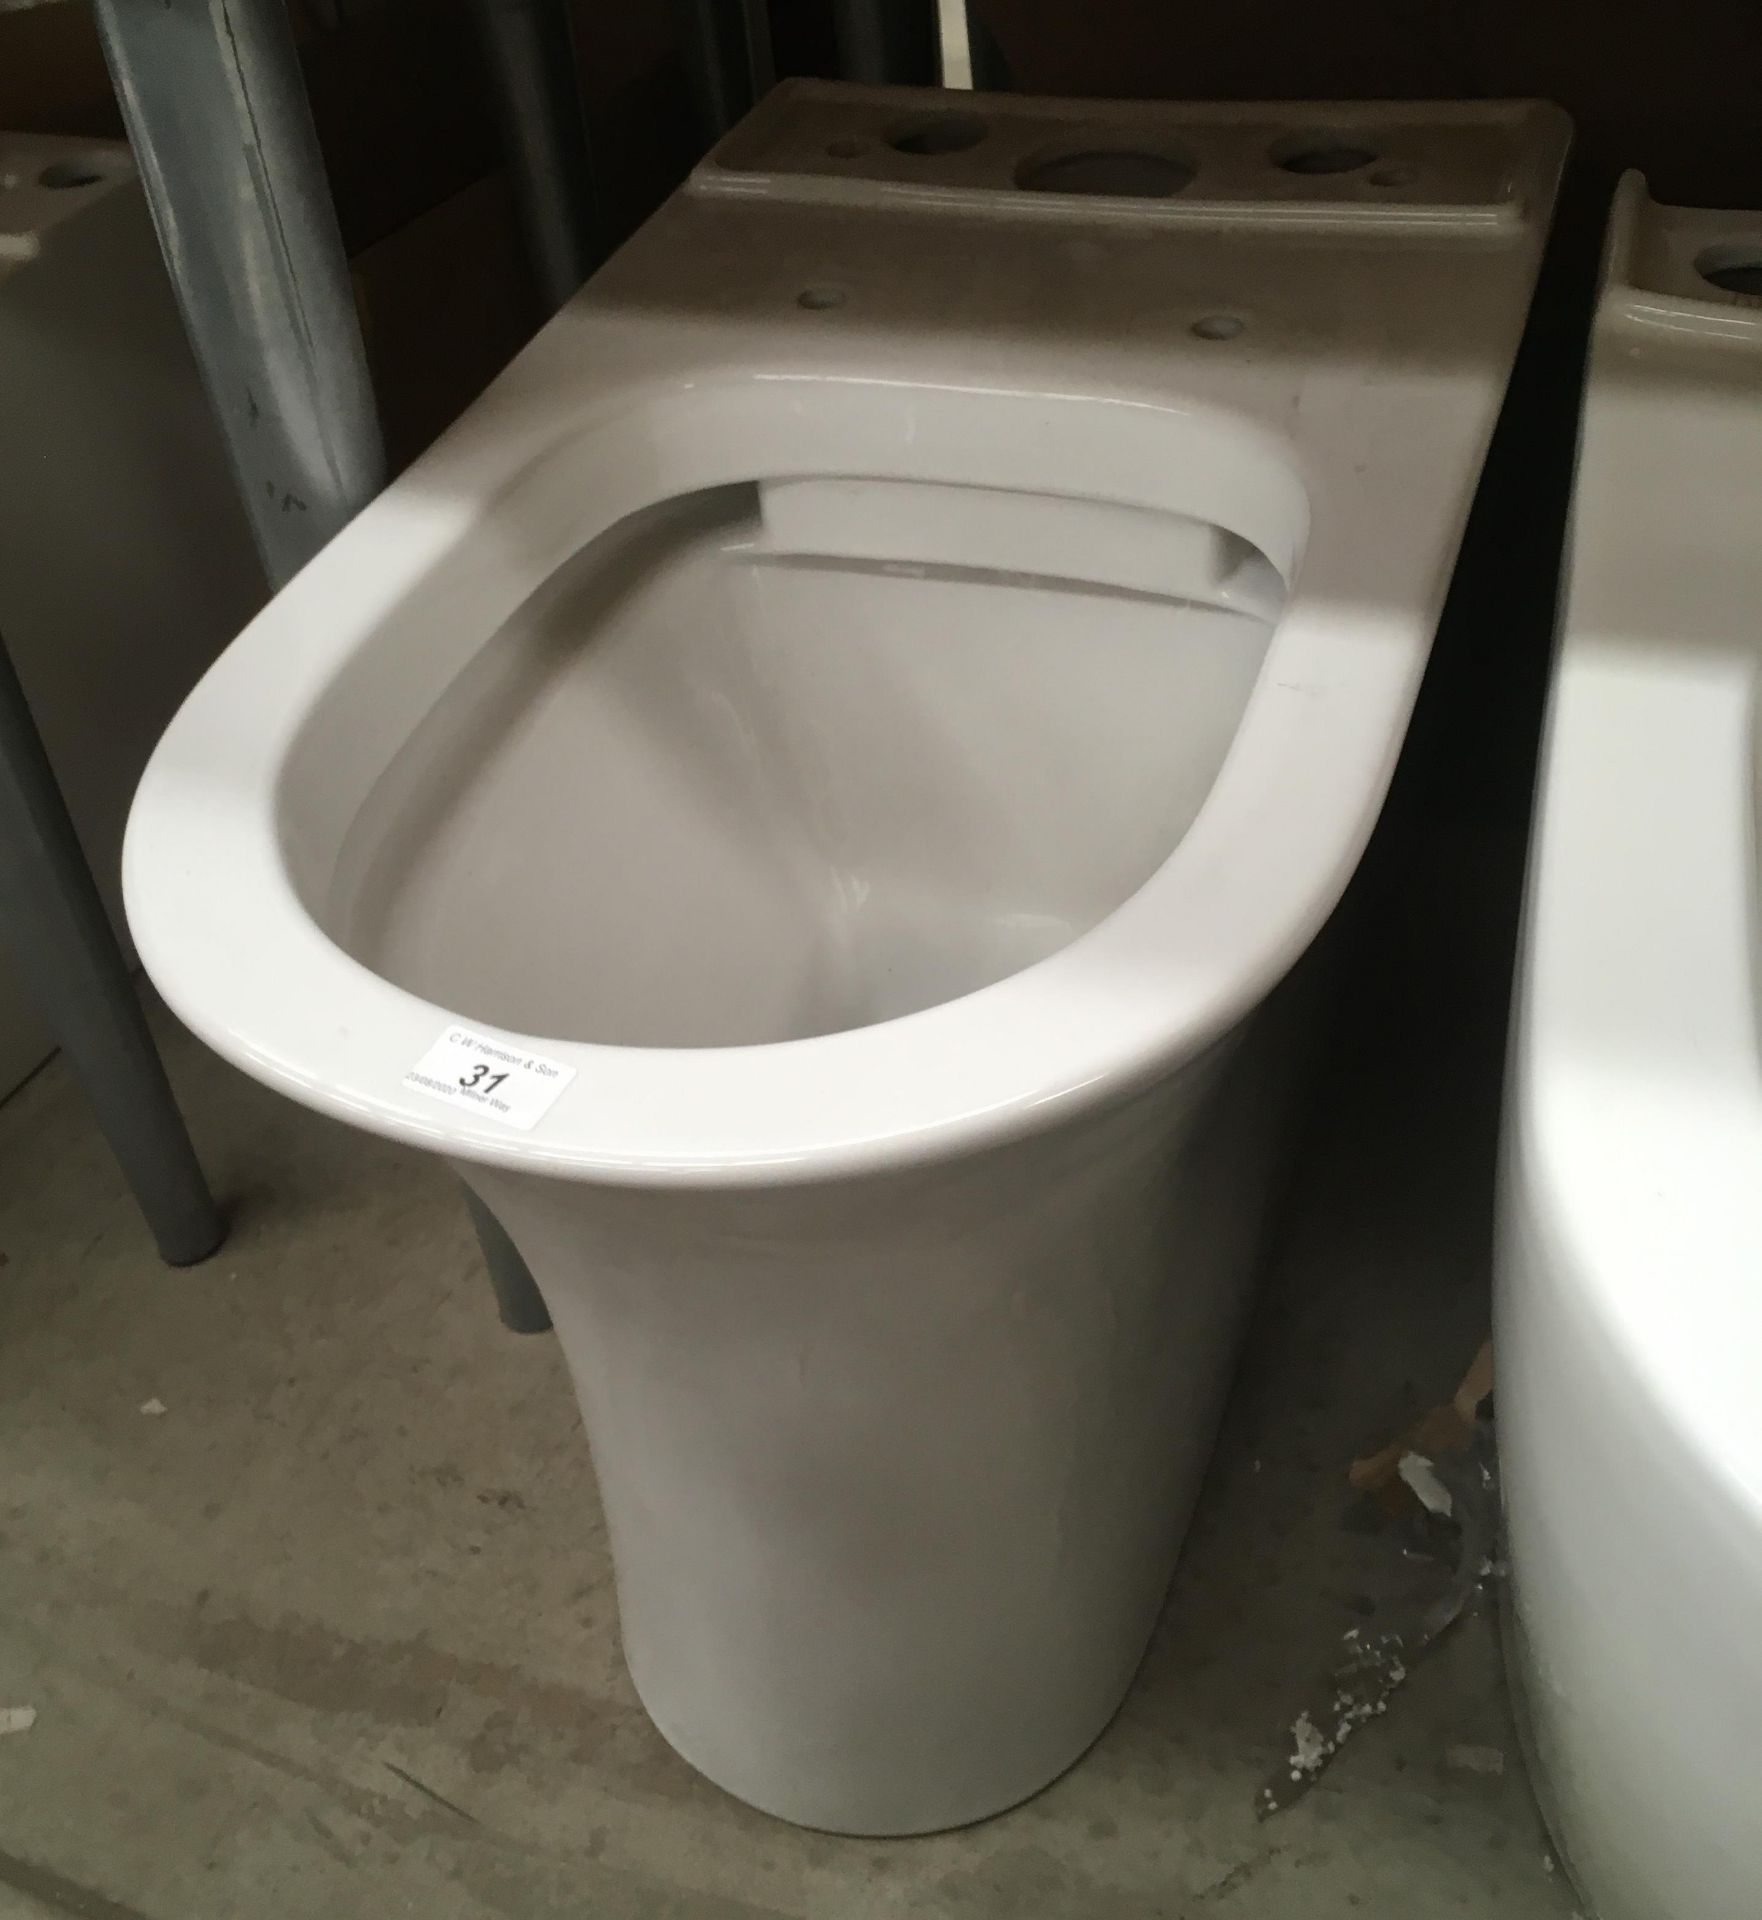 D-shaped toilet pan